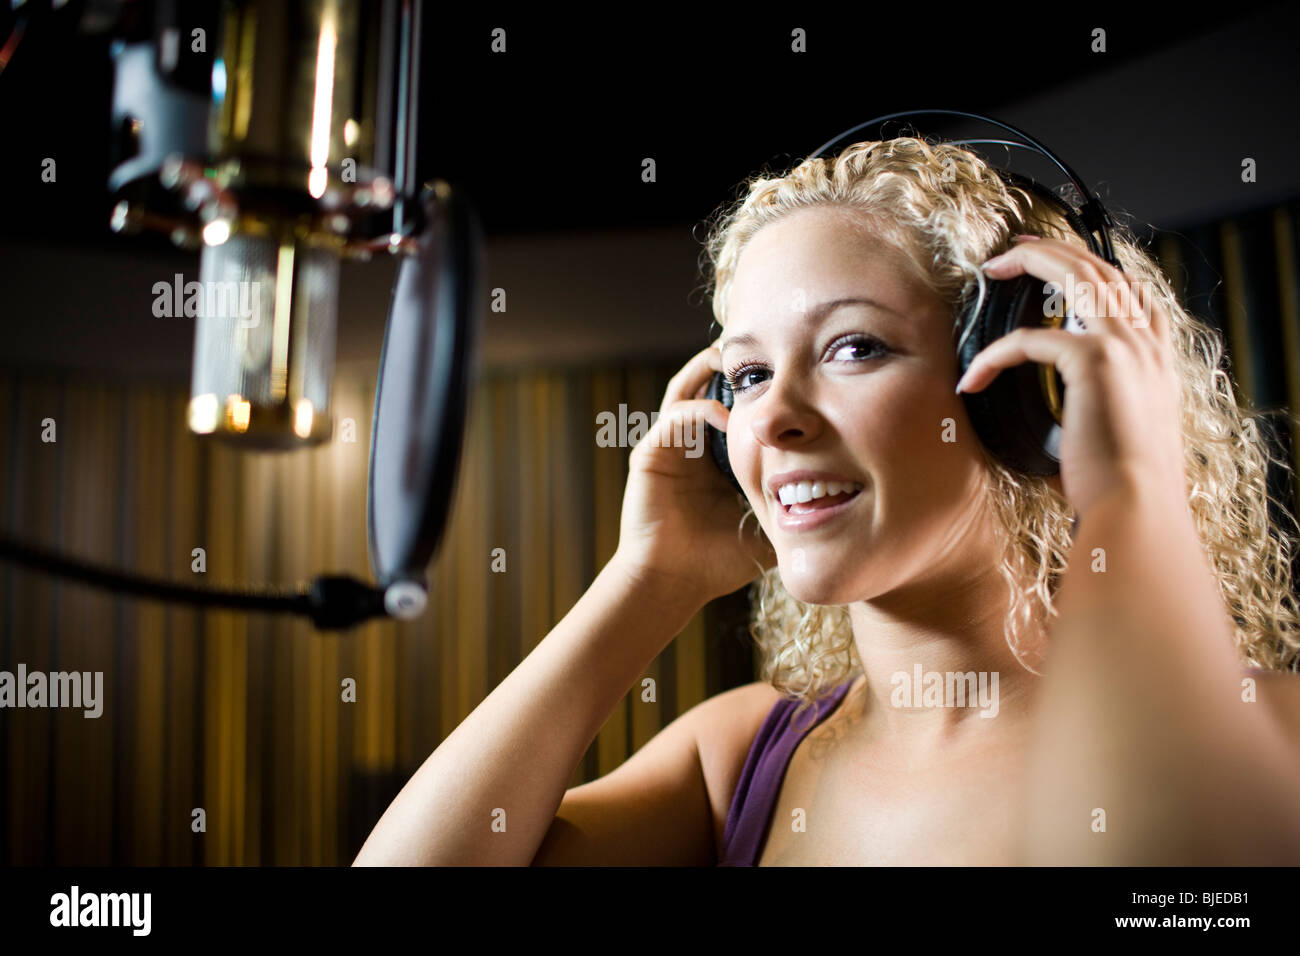 singing in a recording studio Stock Photo